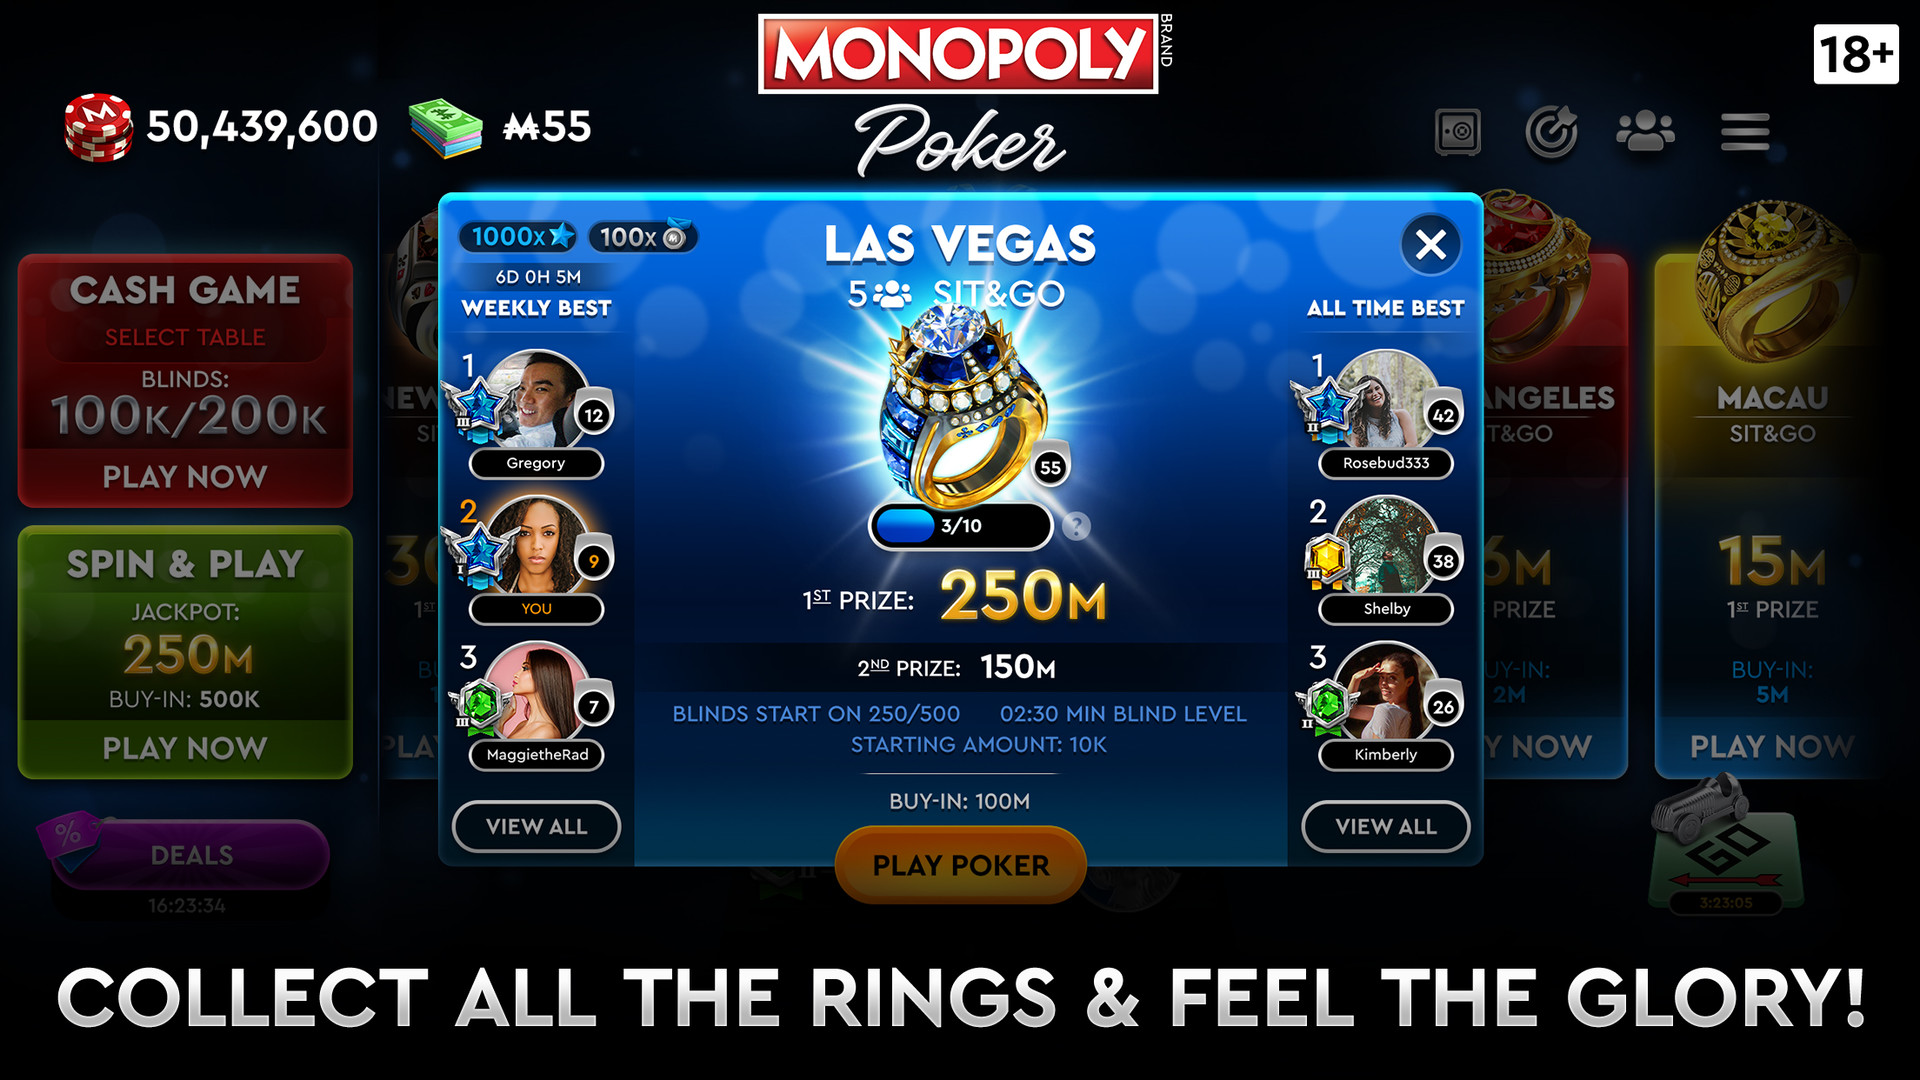 MONOPOLY Poker on Steam